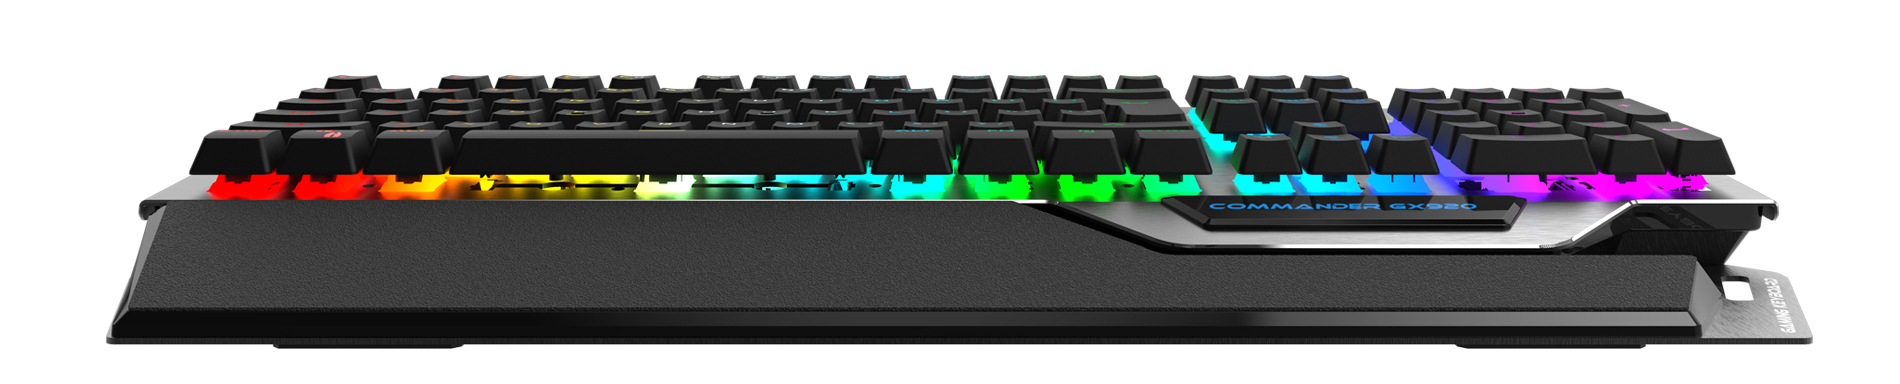 AIKUN Full Mechanical RGB Gaming Keyboard-Gorgeous Gift Box,Full Size,Blue